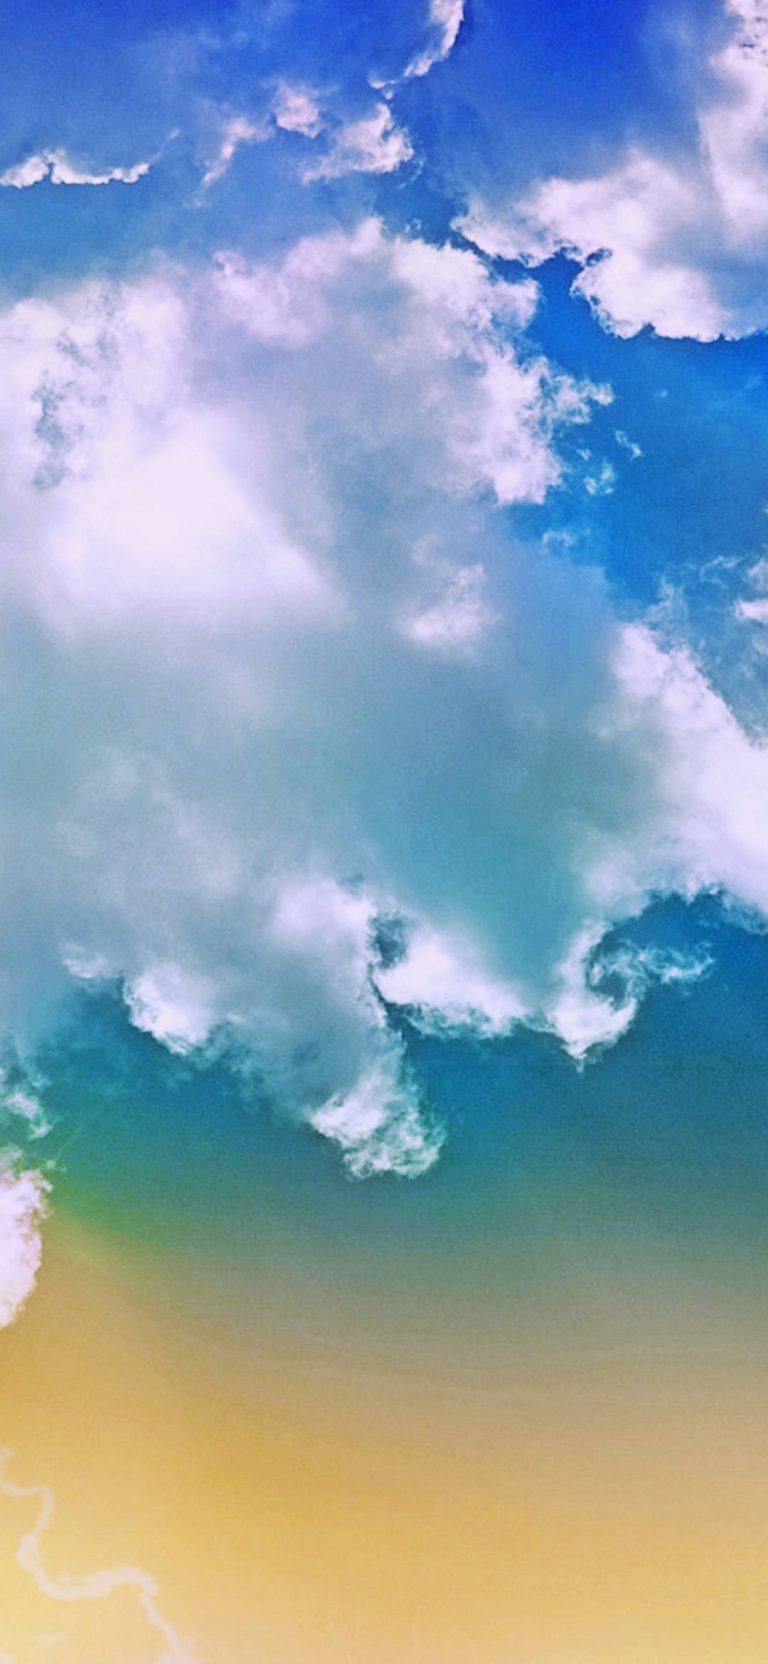 ultra hd wallpaper für android,himmel,wolke,tagsüber,blau,kumulus